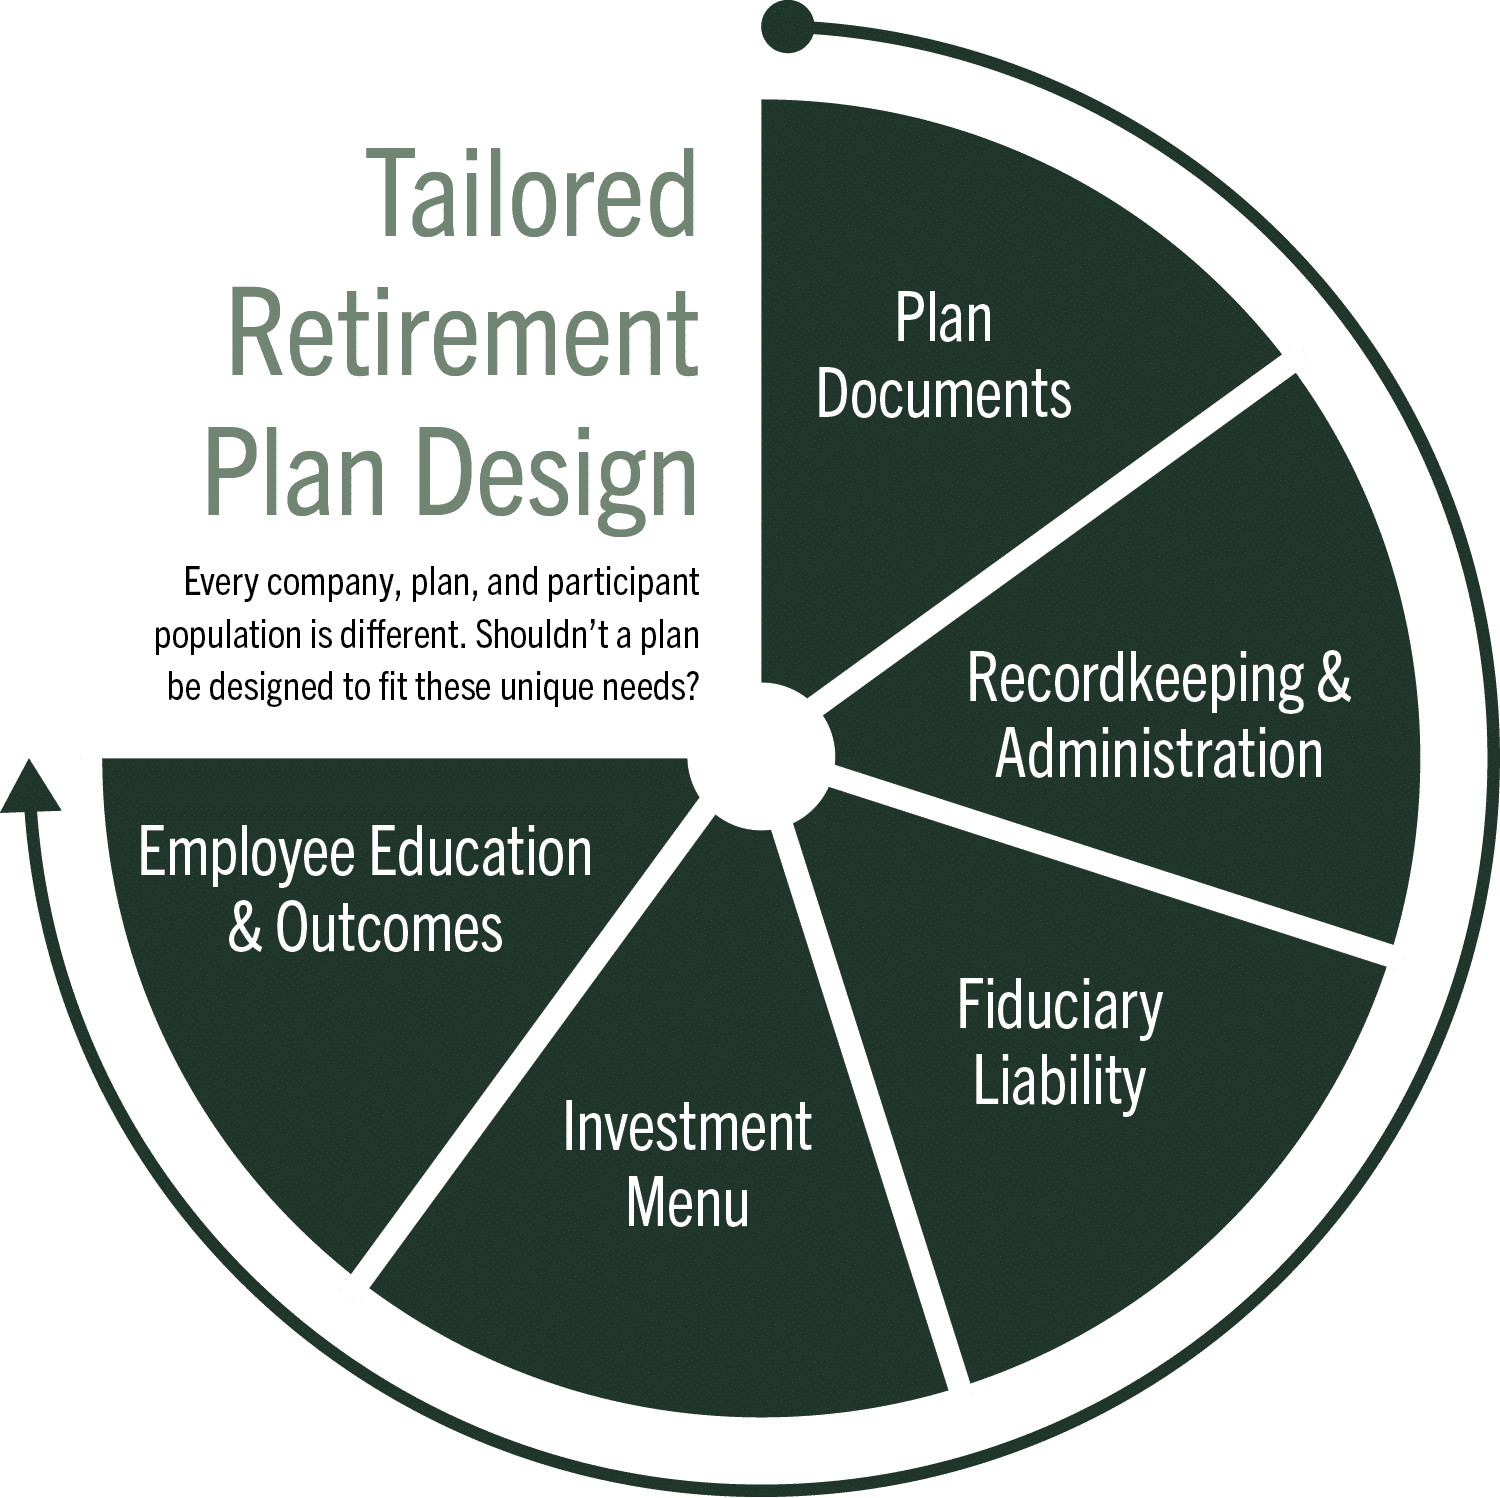 Tailored Retirement Plan Design graphic